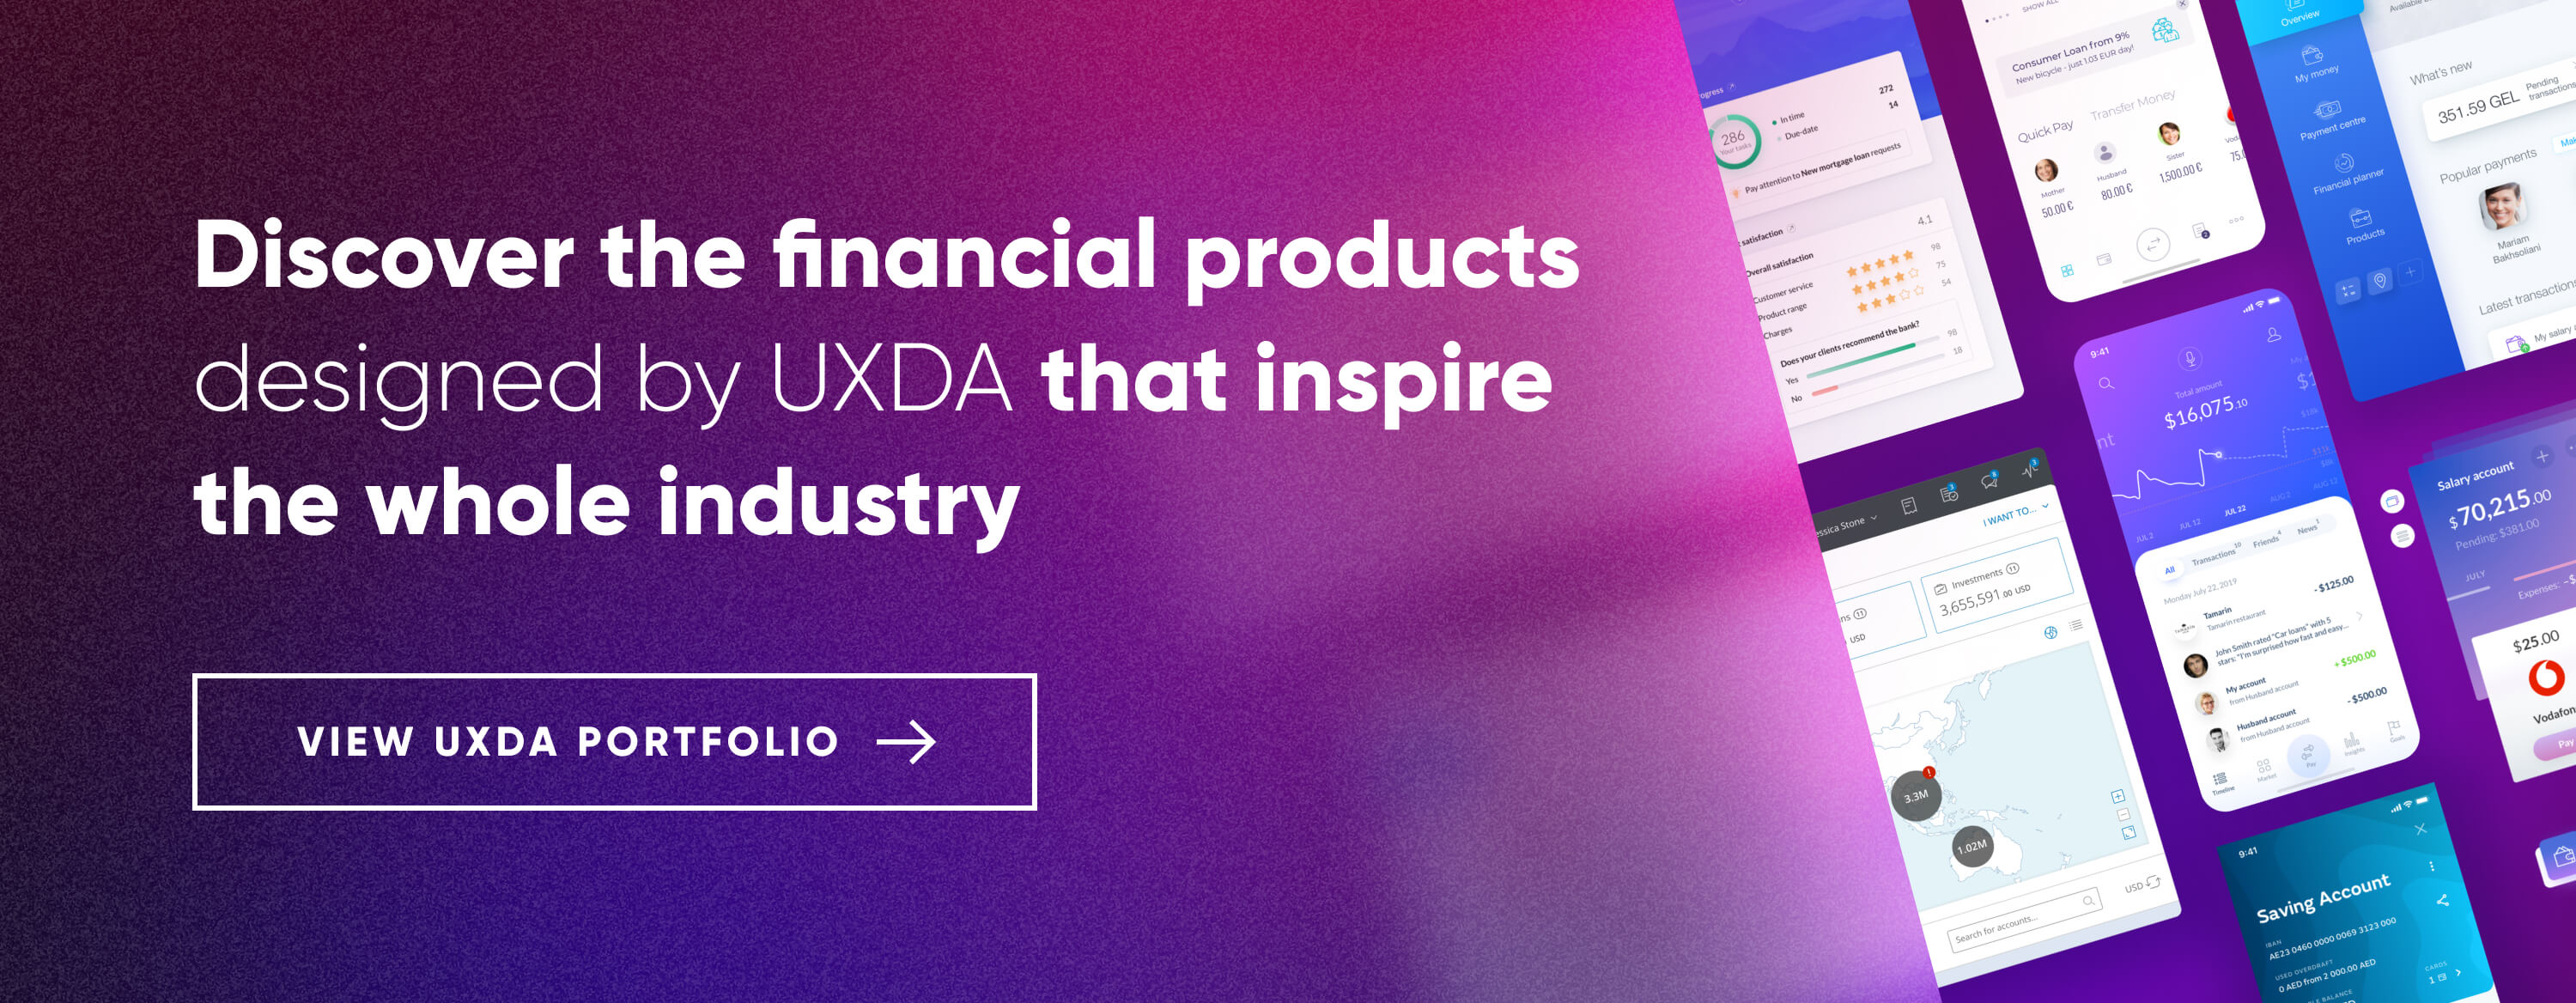 uxda-portfolio-financial-digital-product-inspire-industry-ux-1667398340.jpg